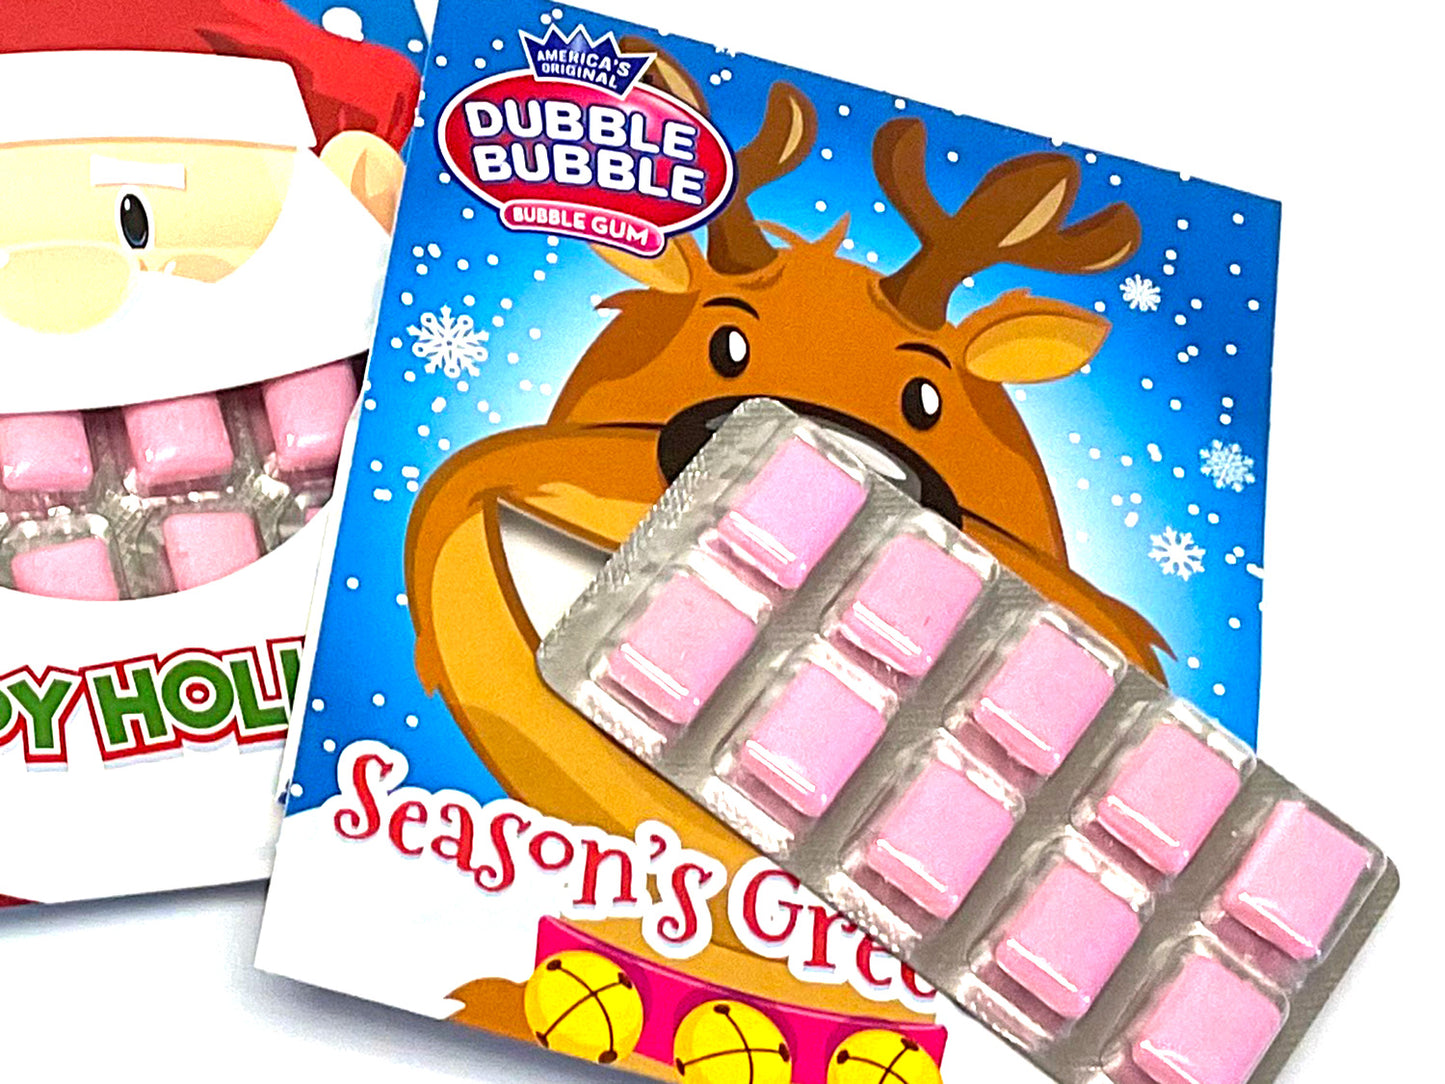 Dubble Bubble Christmas Character Cards - open